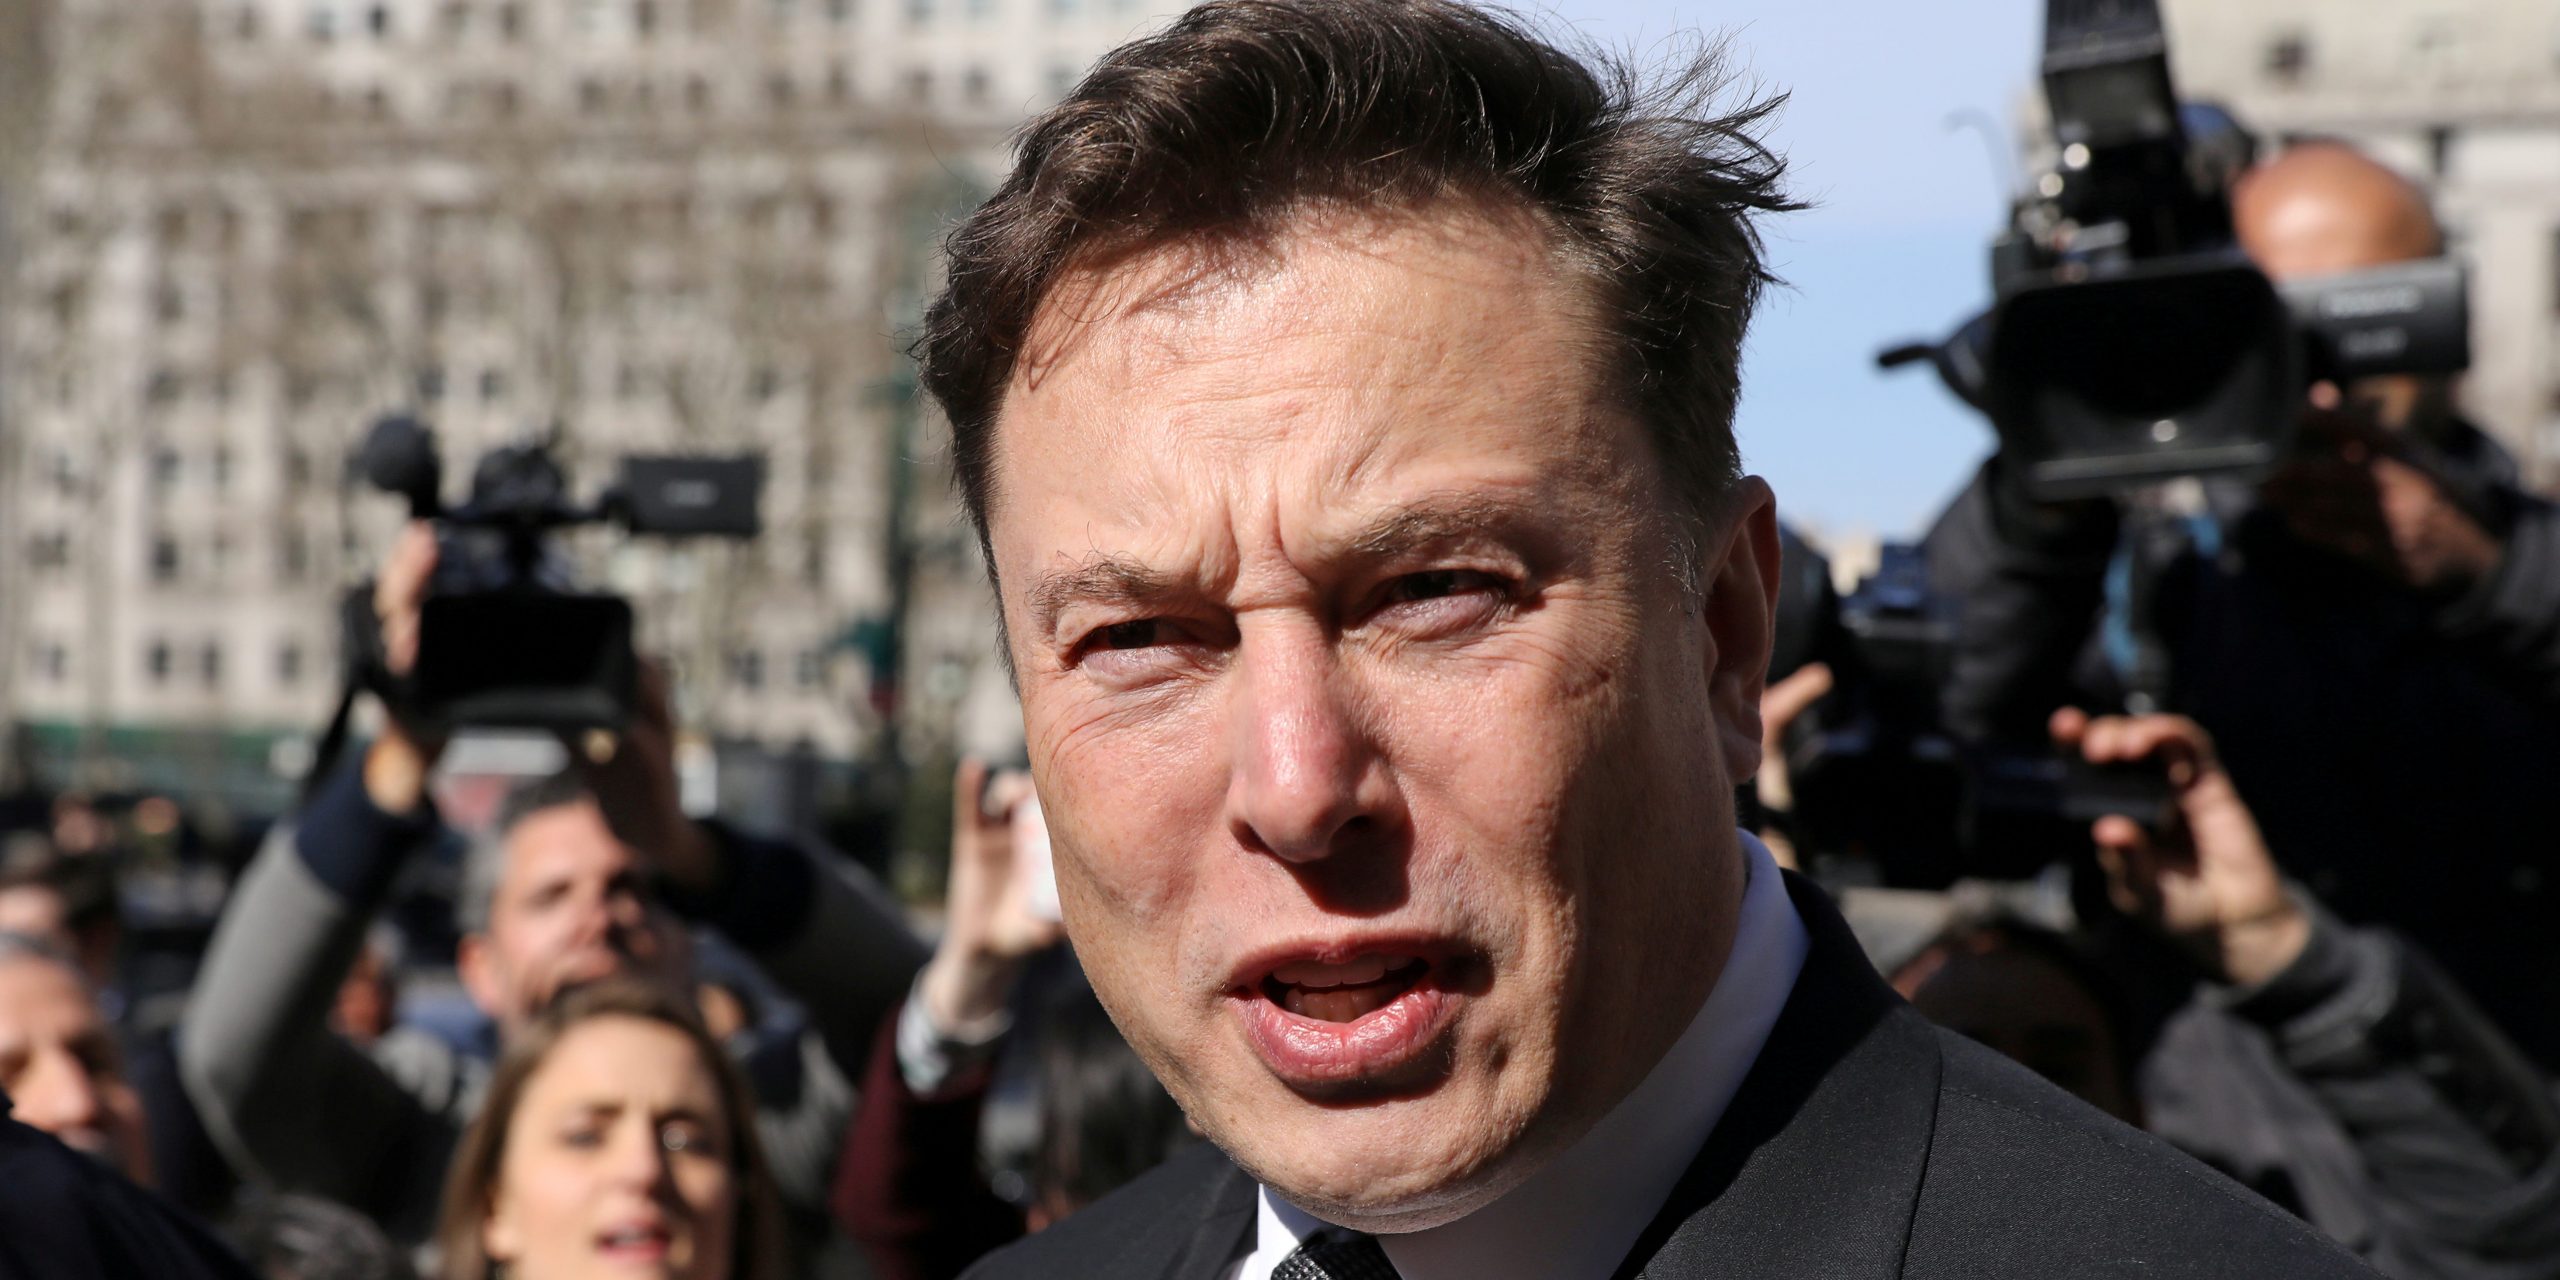 Tesla CEO Elon Musk in a Suit in Manhattan.JPG